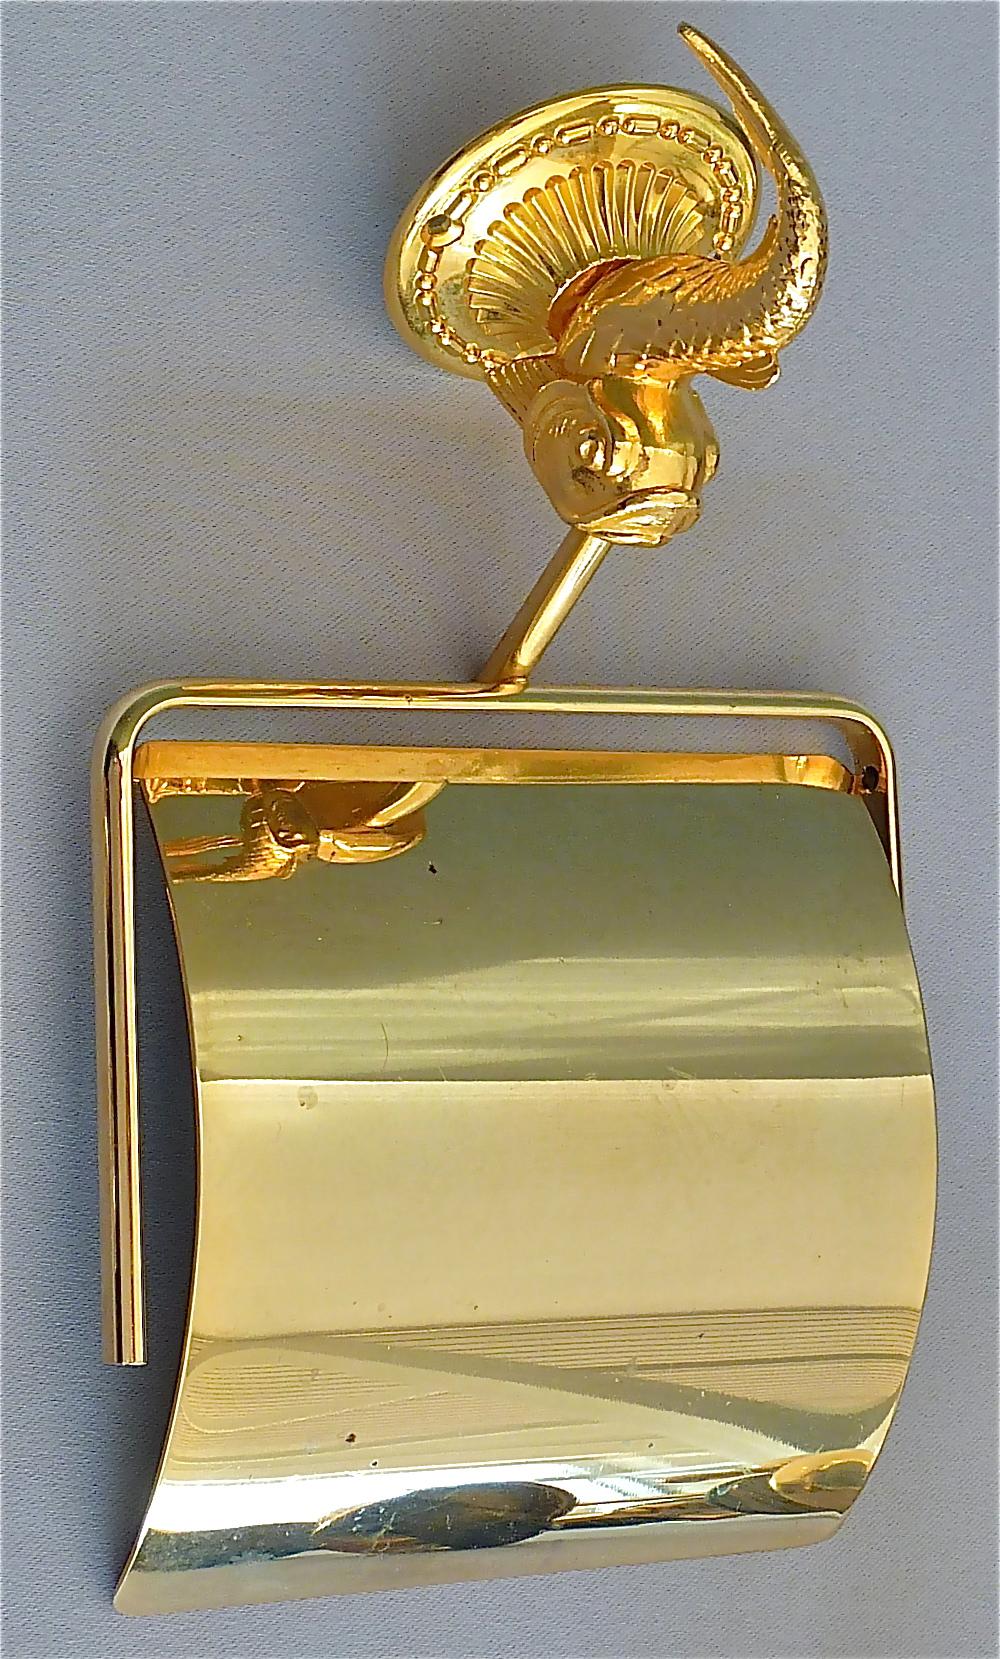 Italian Luxus Zazzeri Gilt Brass Bathroom Fixture Set of 30, 1970-80 Vintage For Sale 12